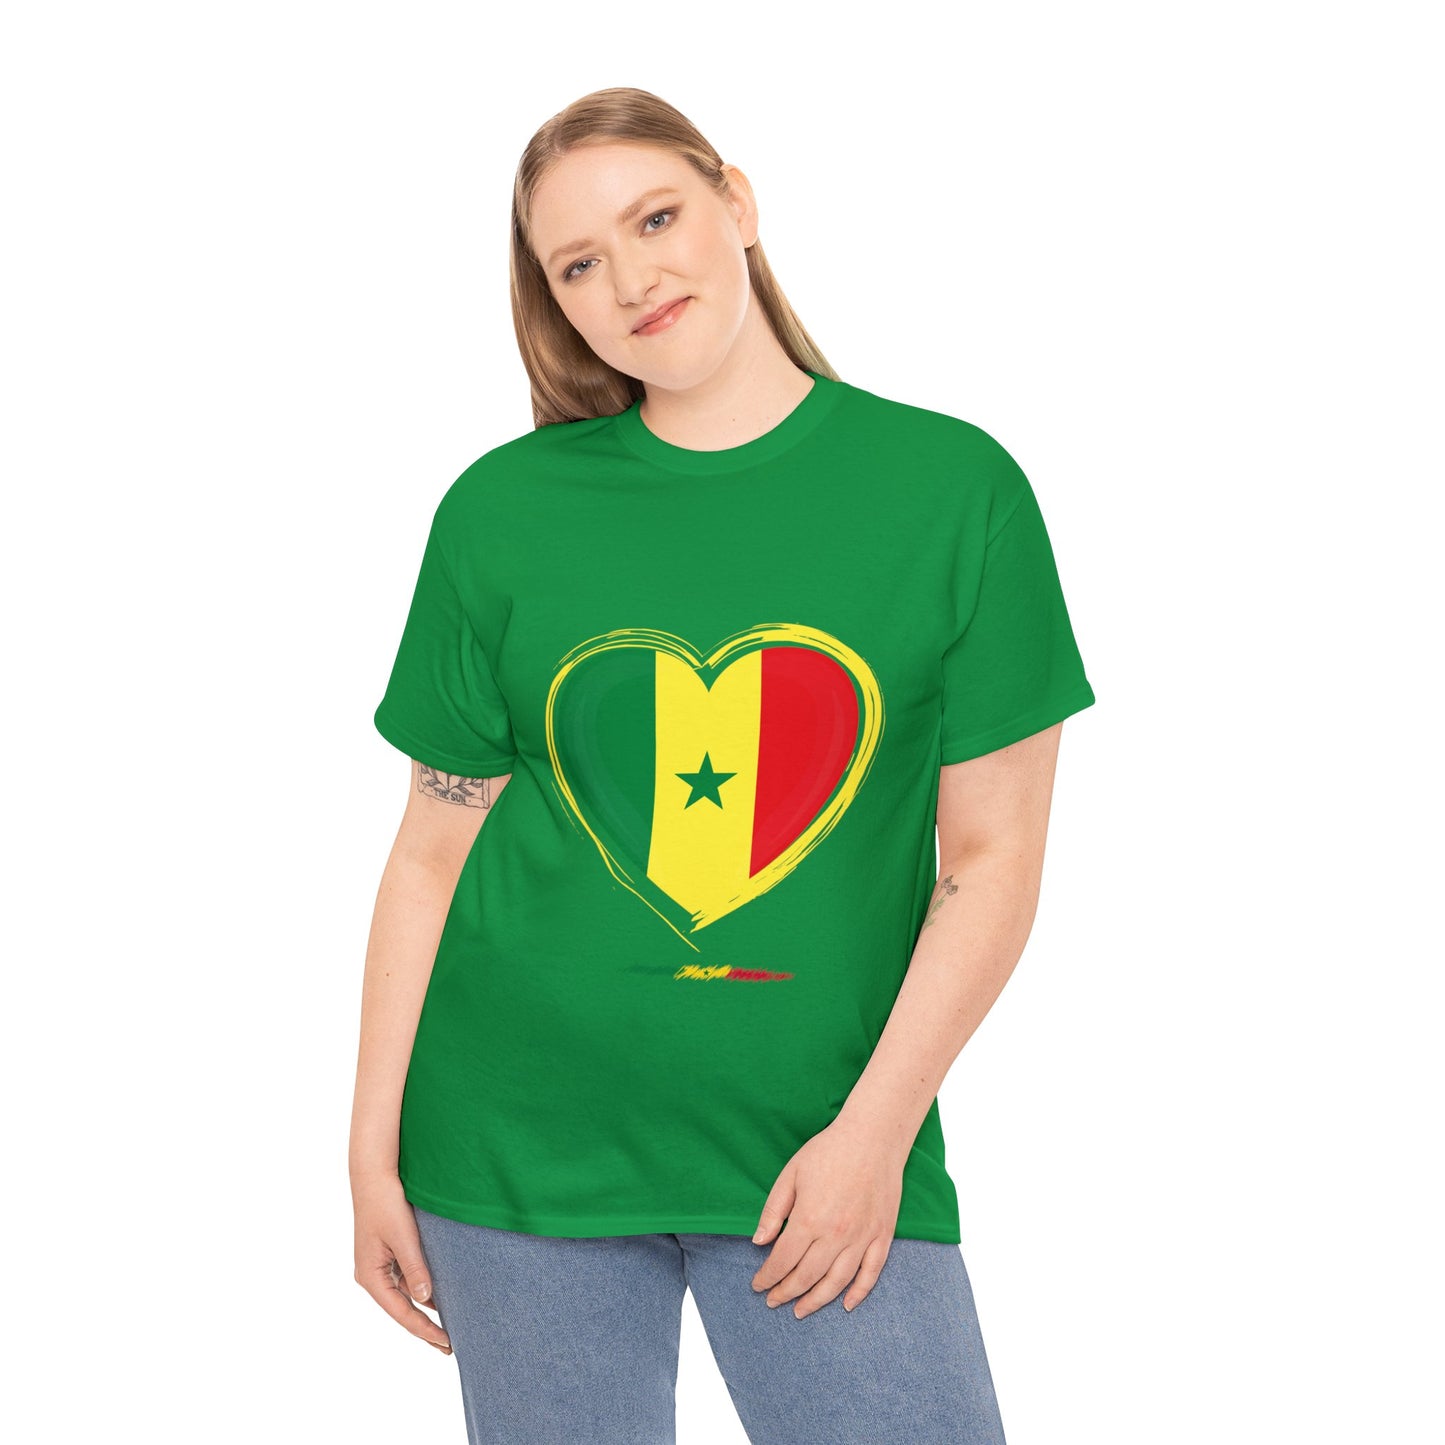 Senegal t-shirts